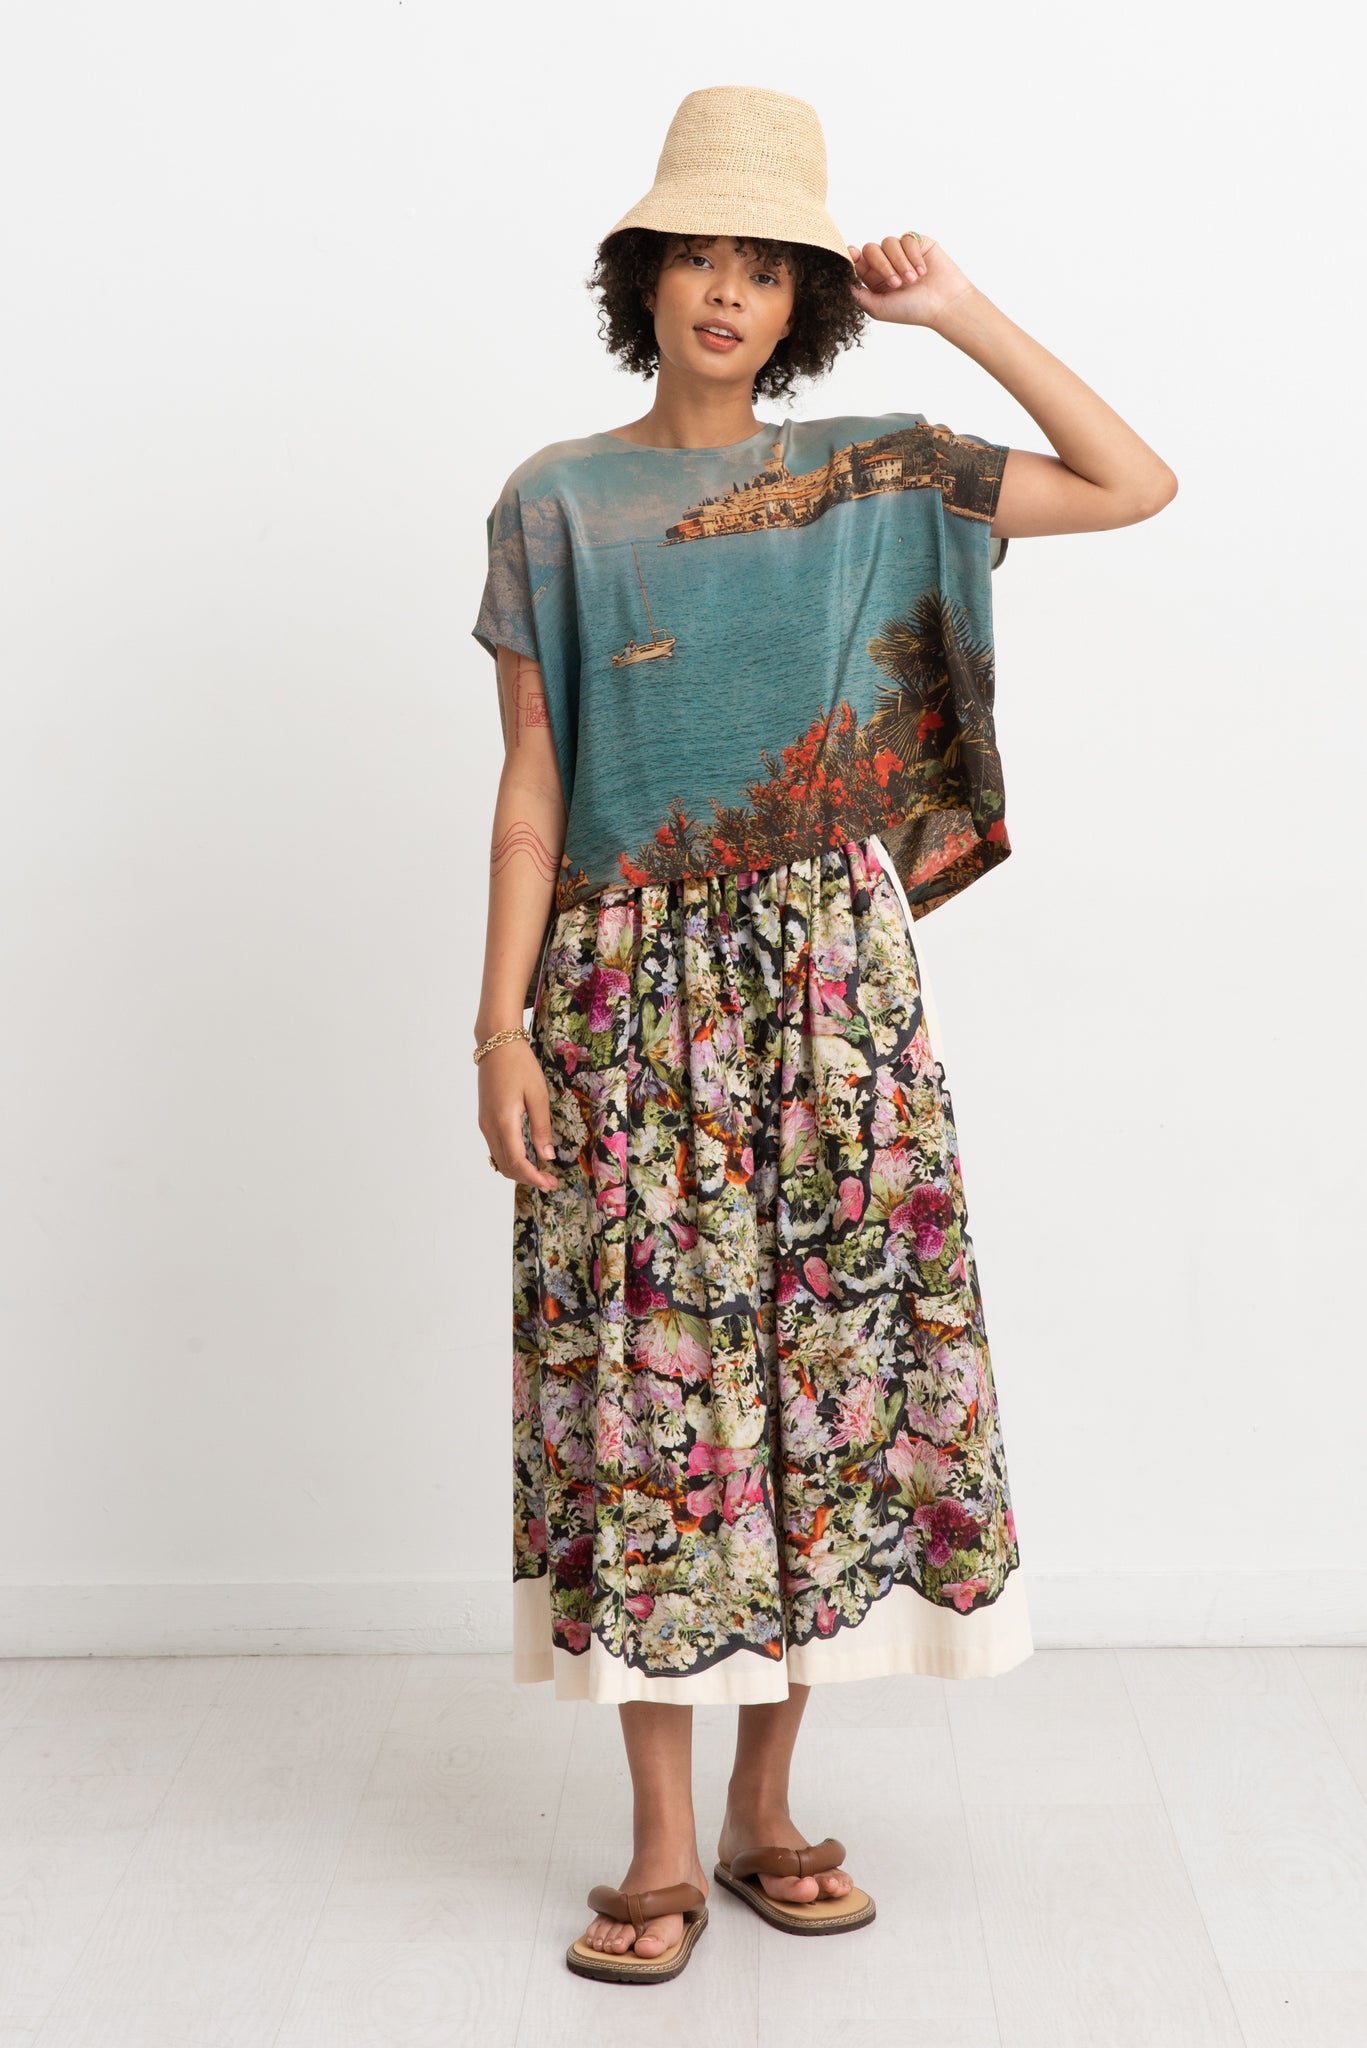 ANNTIAN - Wide Skirt, Panel Print K - Pressed Flowers